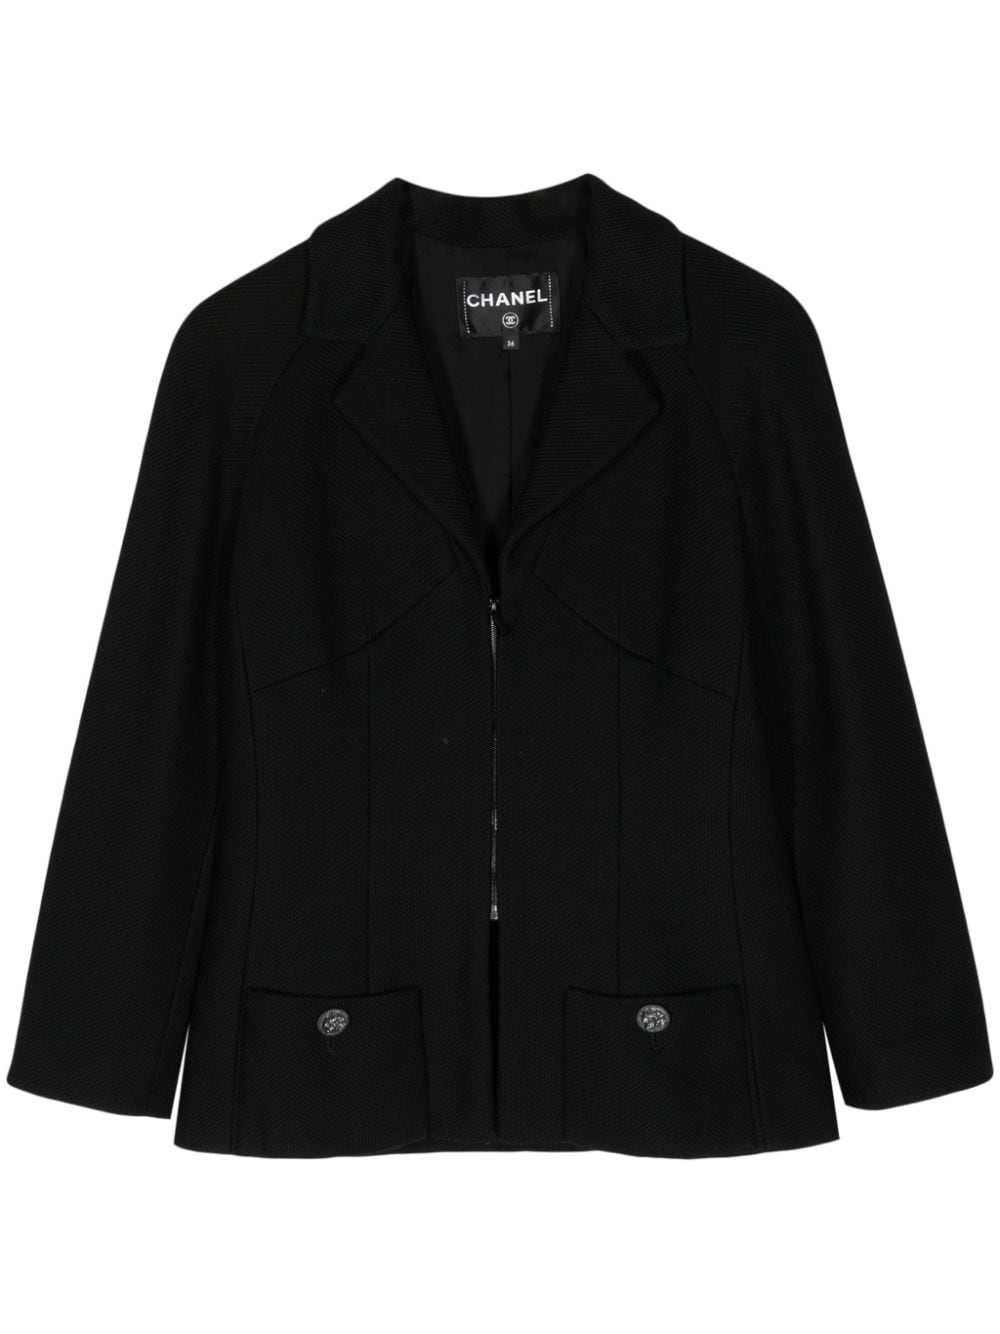 CHANEL Pre-Owned 2000 zip-up mesh jacket - Black - image 1